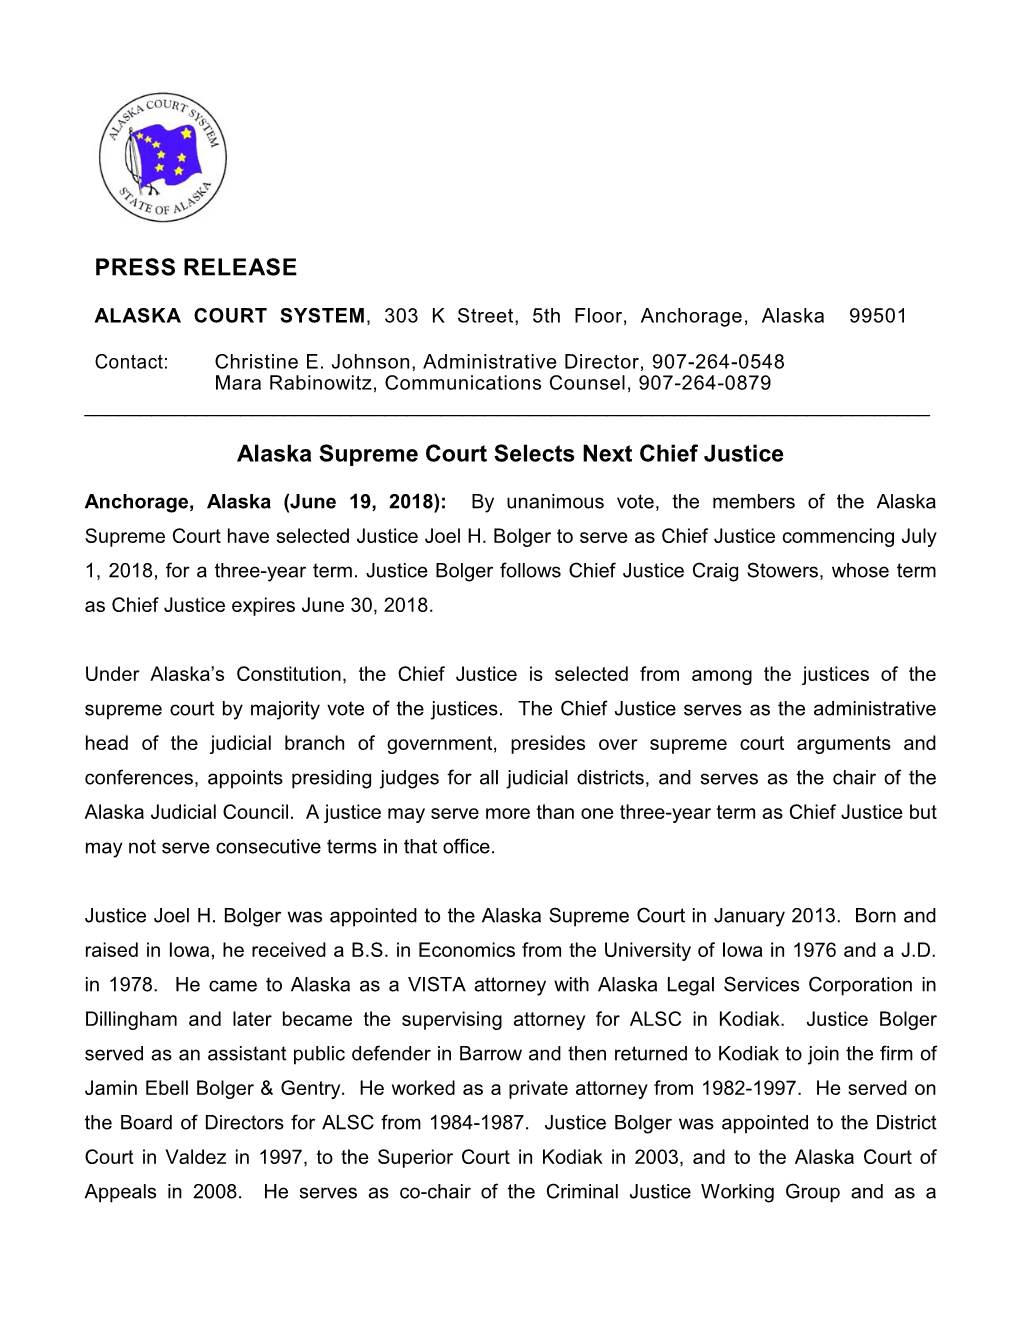 Press Release: Alaska Supreme Court Selectes Next Chief Justice